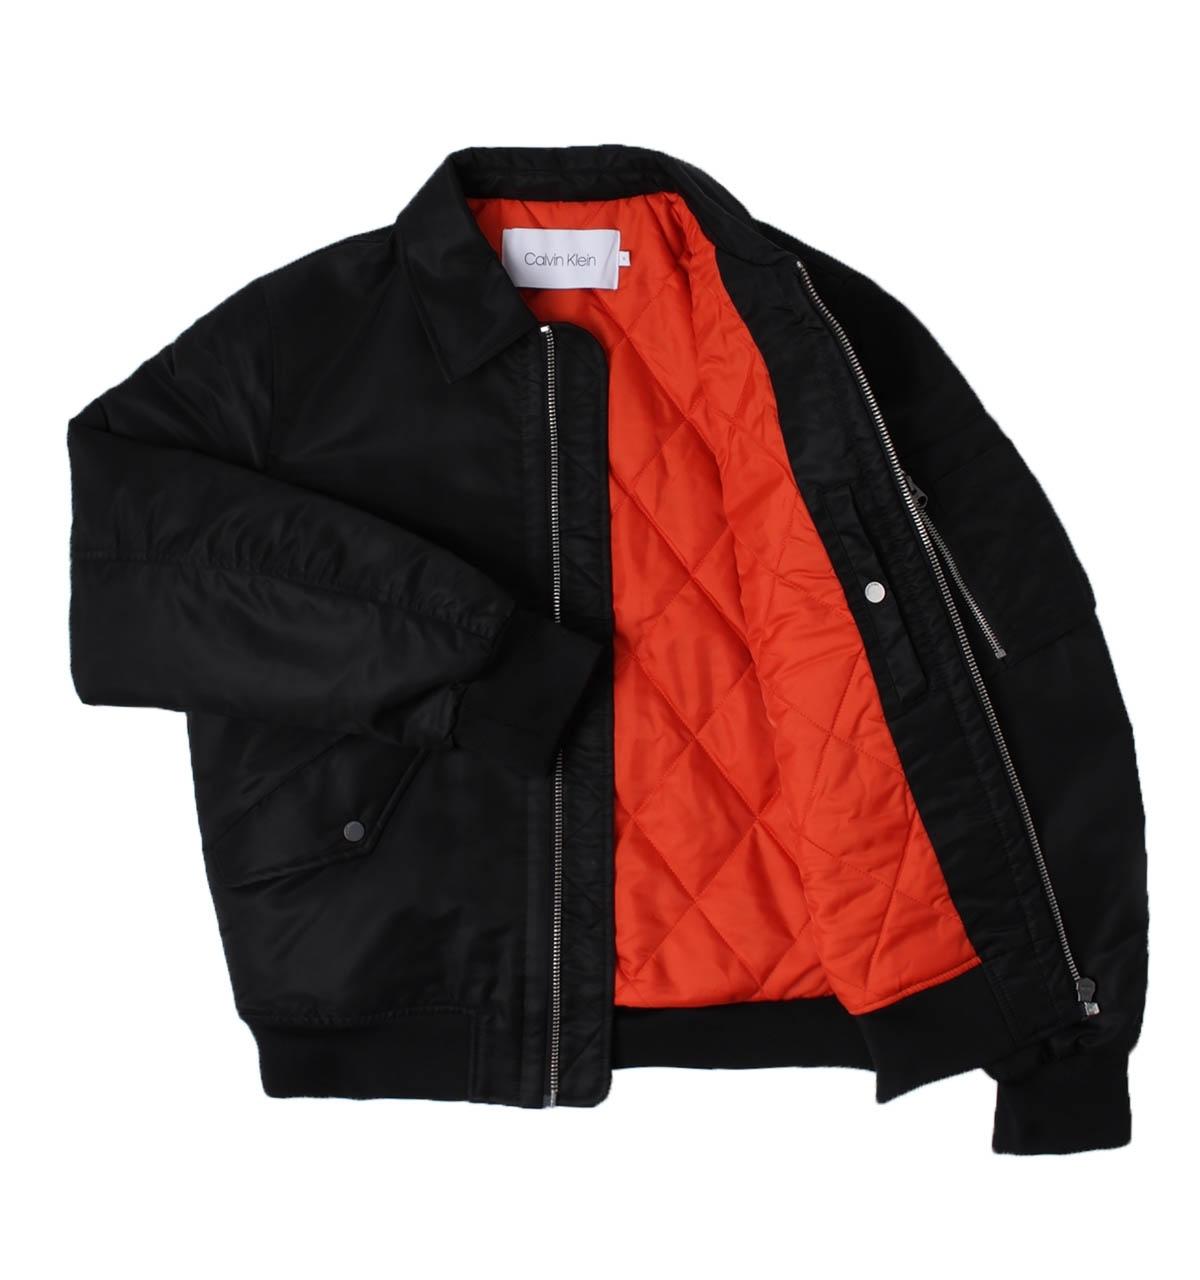 Calvin Klein Perfect Black Flight Jacket in Black for Men - Lyst